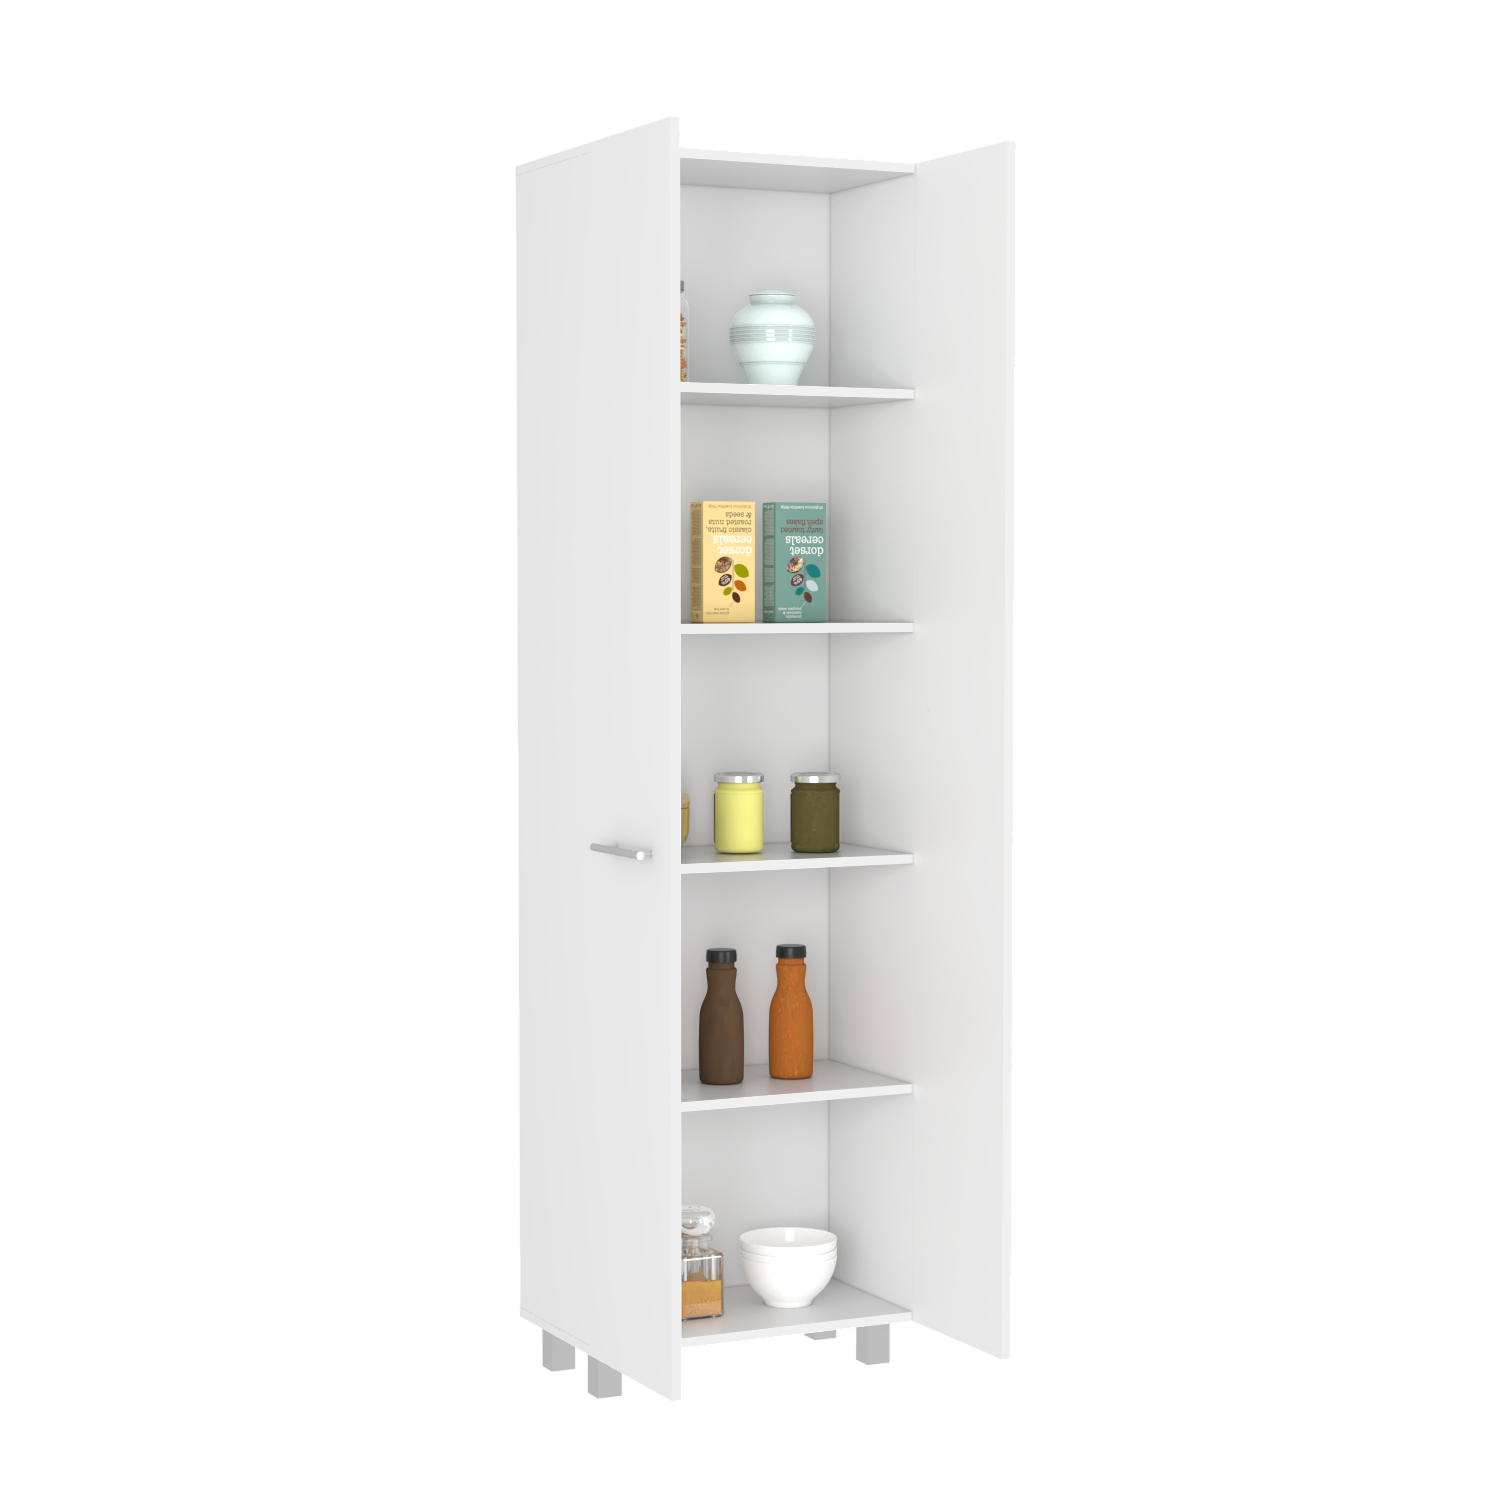 Pantry Cabinet Phoenix, Five Interior Shelves, White Finish